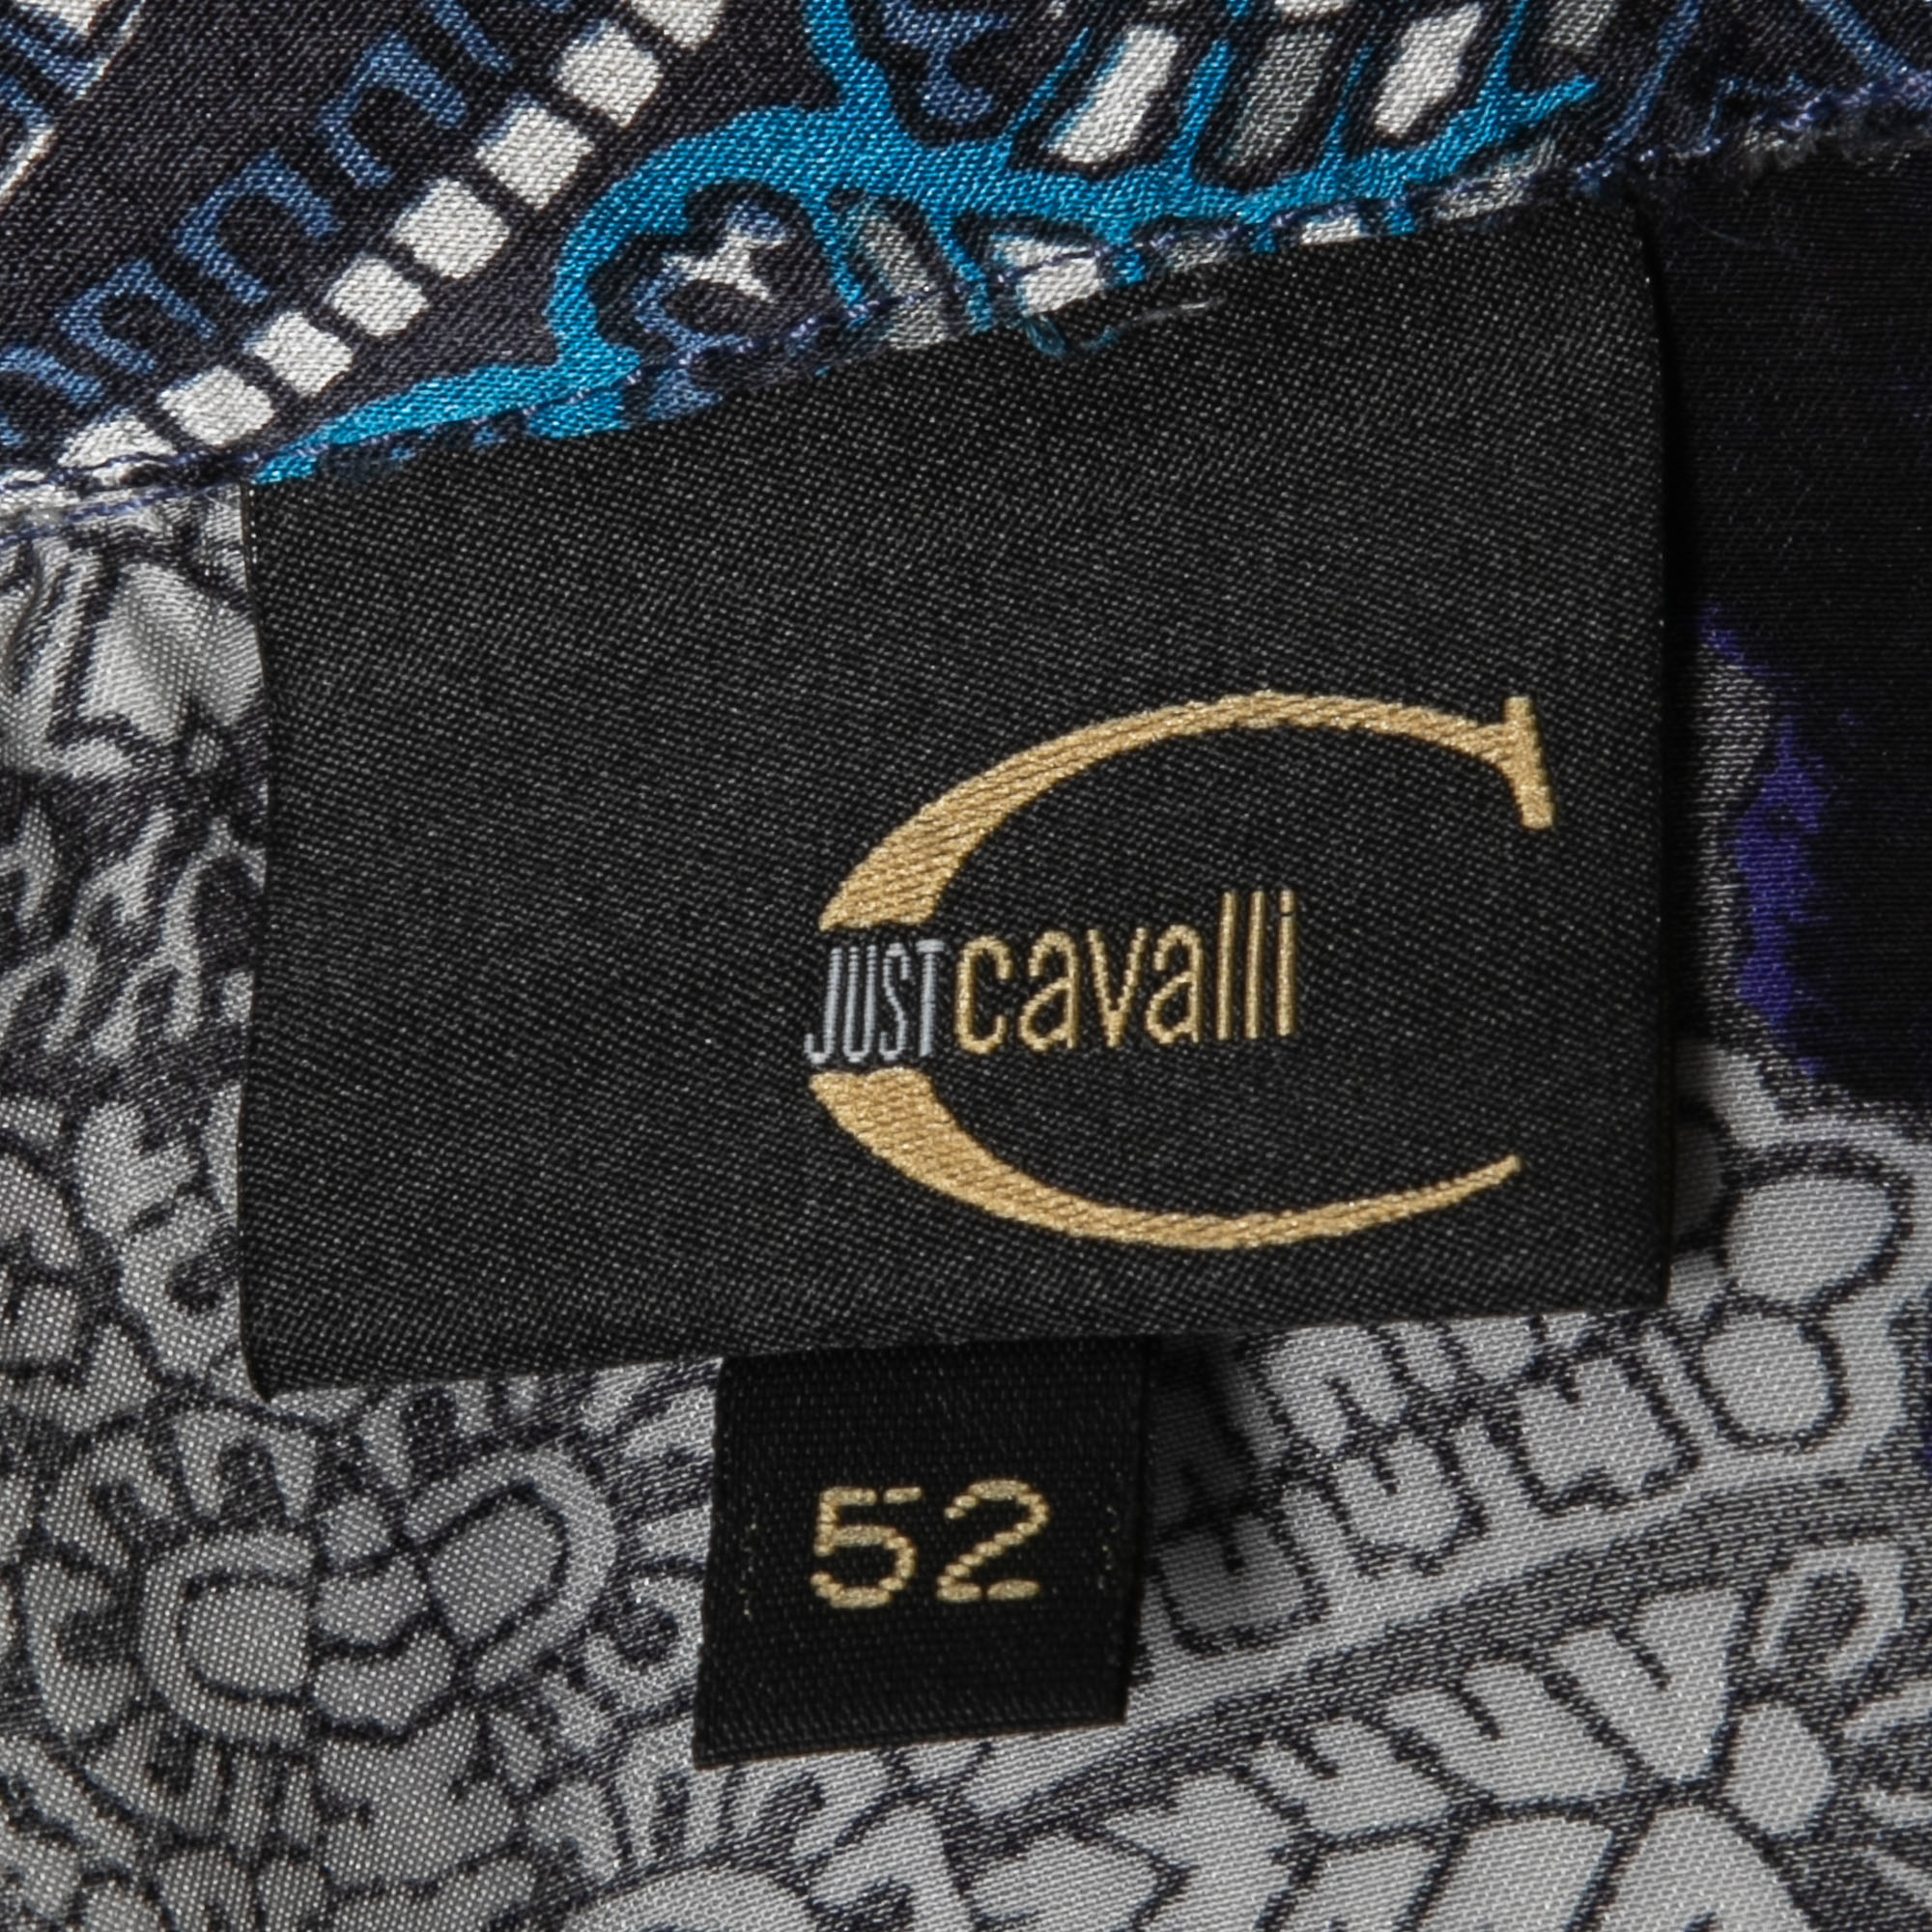 Just Cavalli Blue Paisley Print Satin Silk Button Front Shirt XL